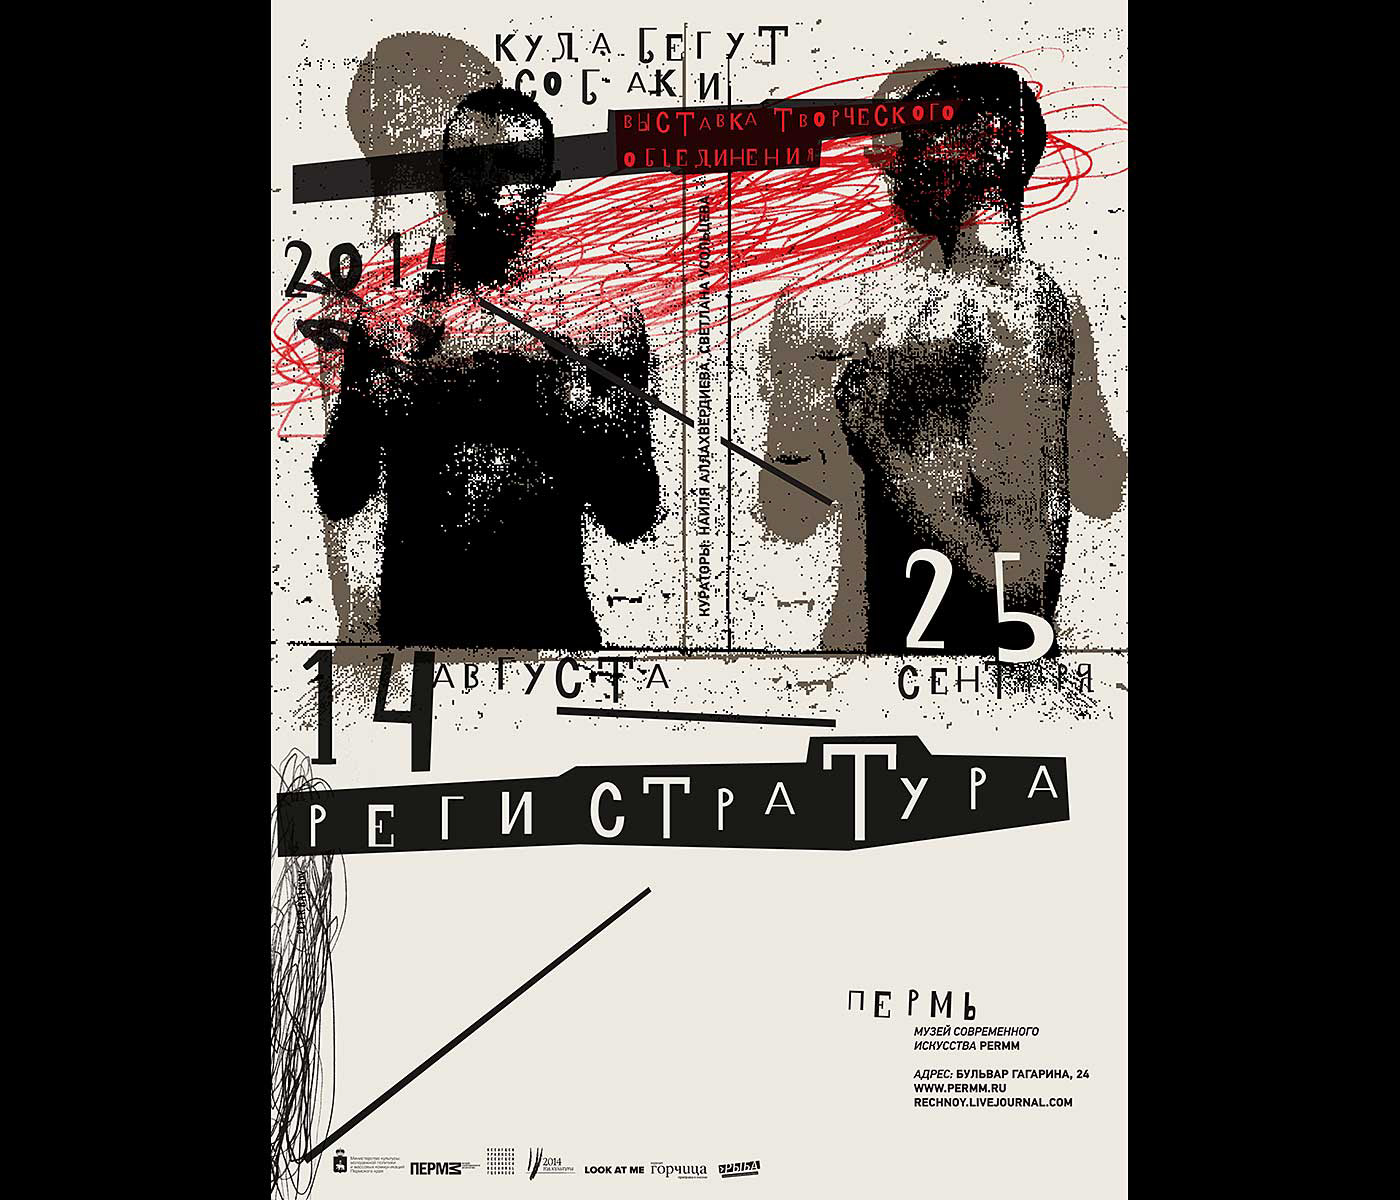 Advertising  bankov Exhibition  modern art museum peter bankov poster Poster Design Social media post Socialmedia